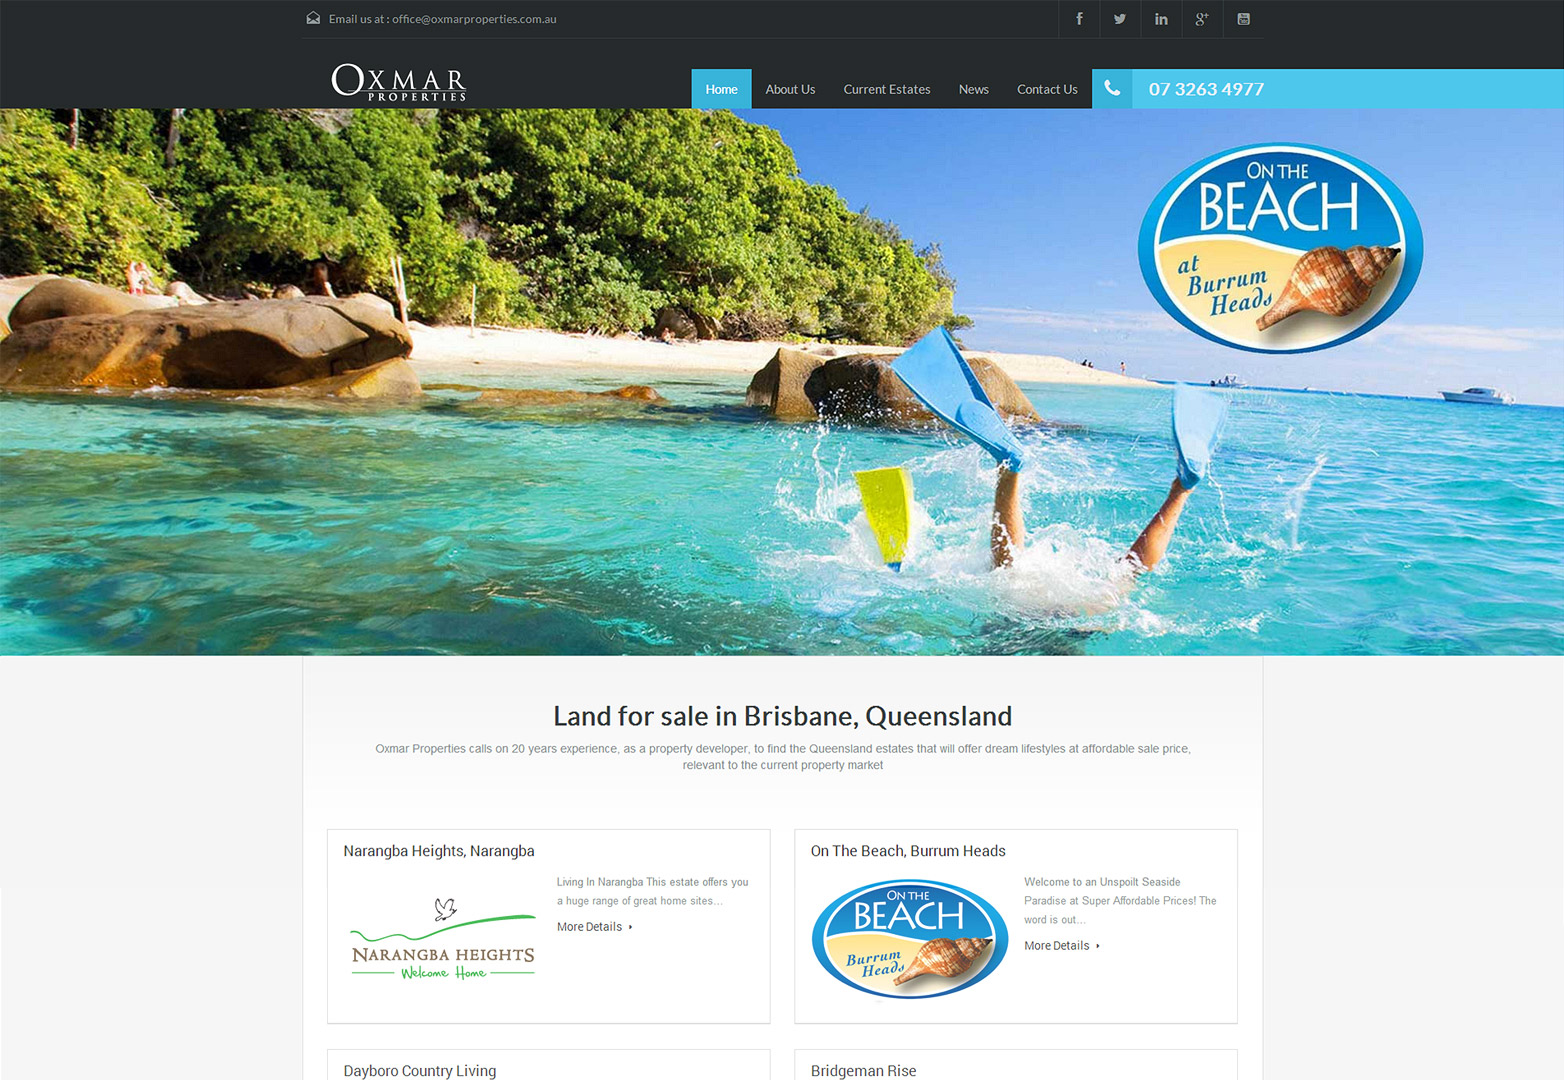 Oxmar homepage view on desktop